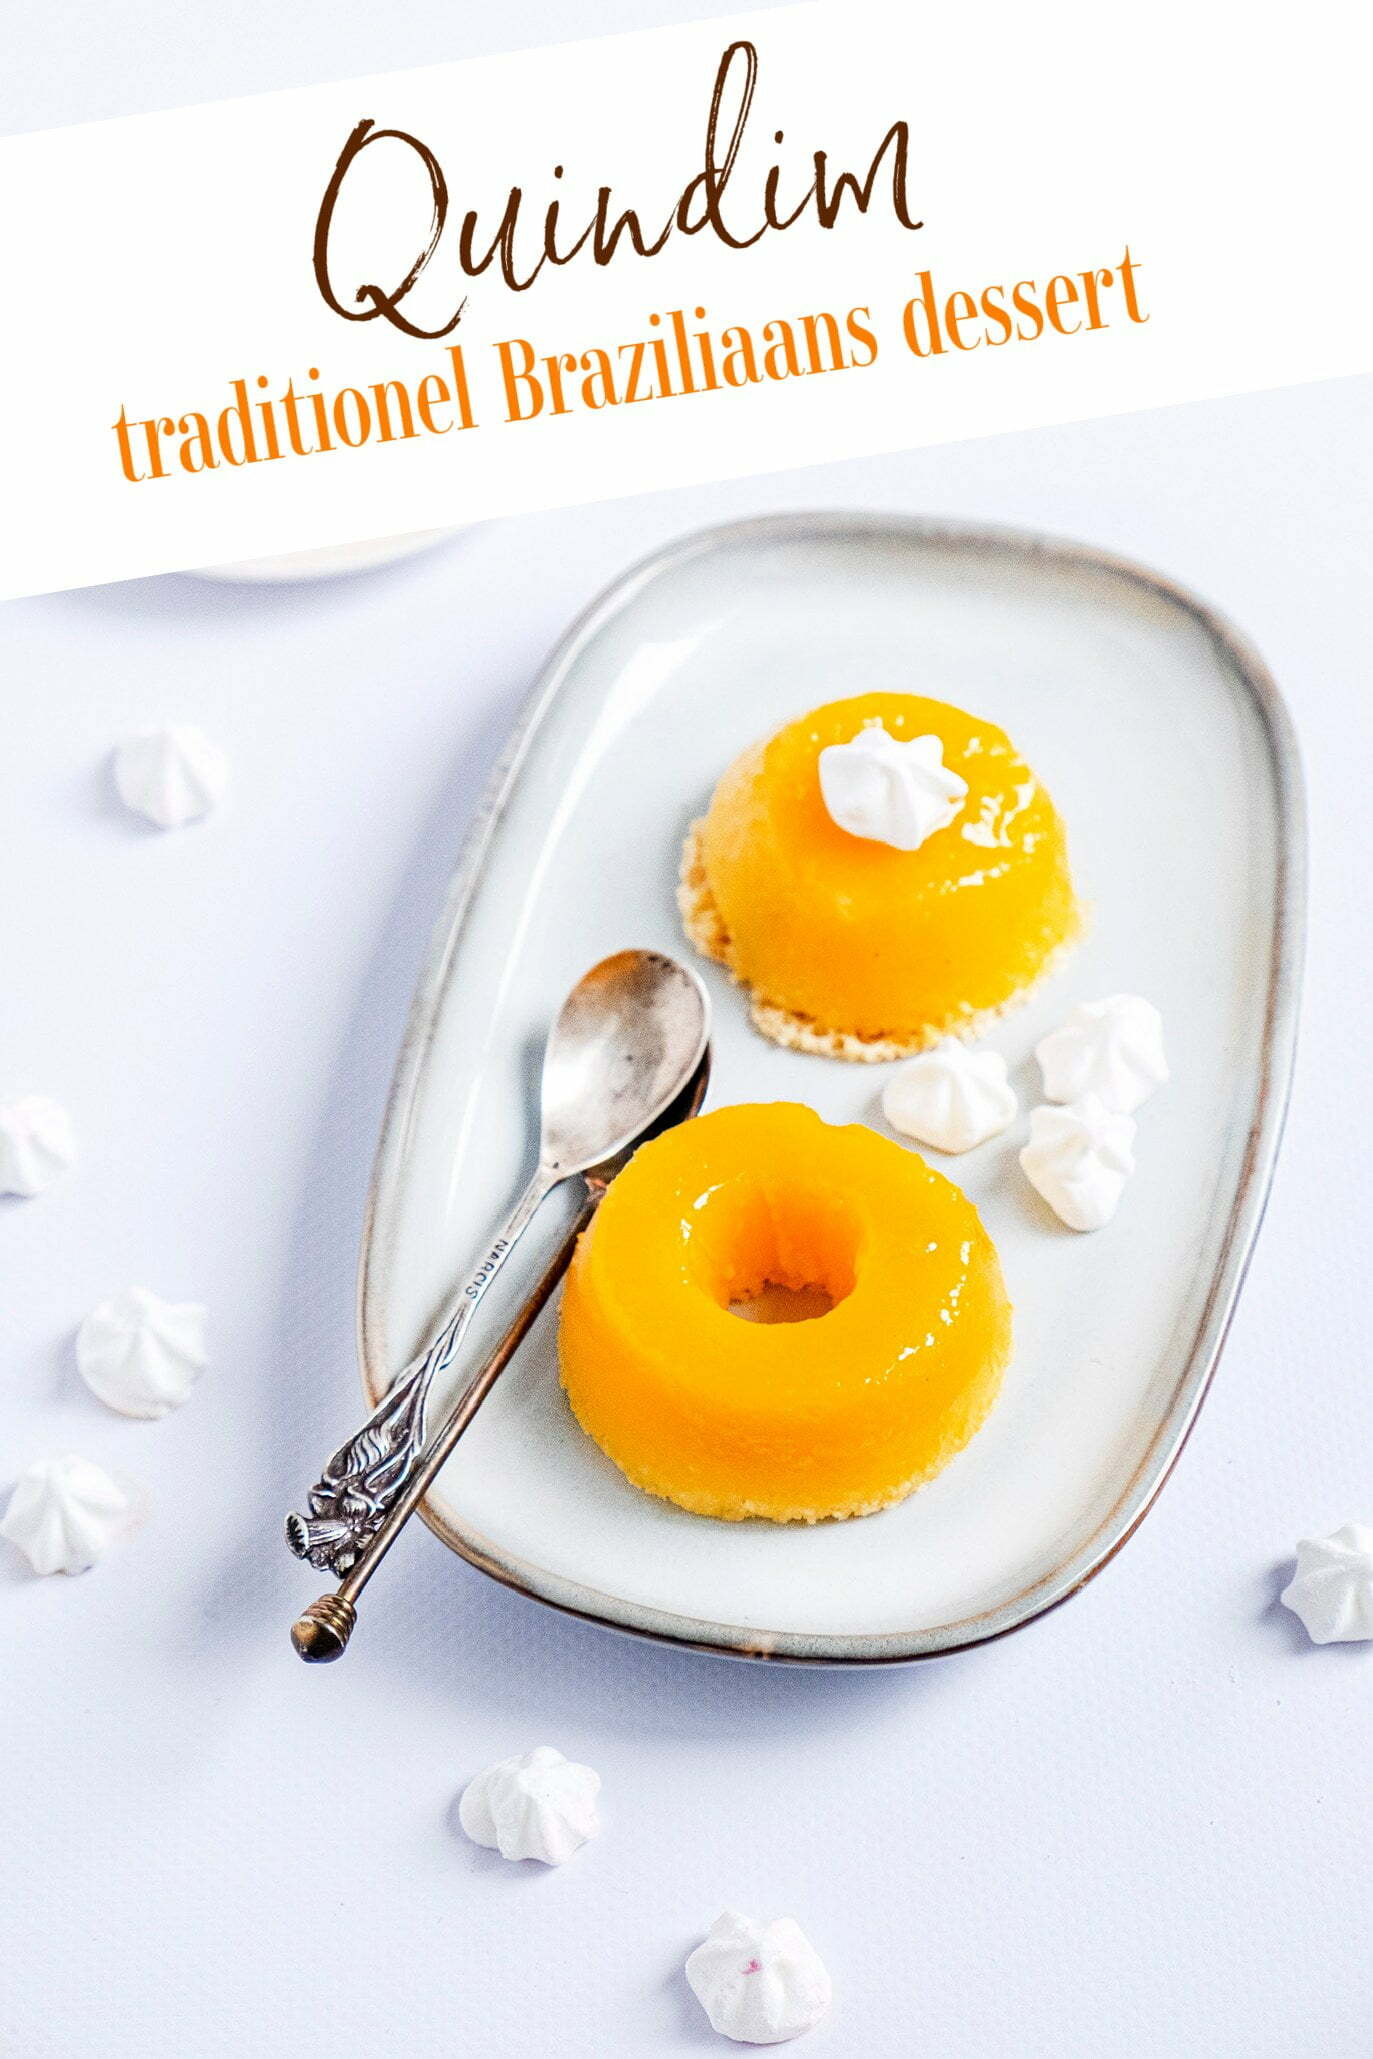 traditionel Braziliaans dessert